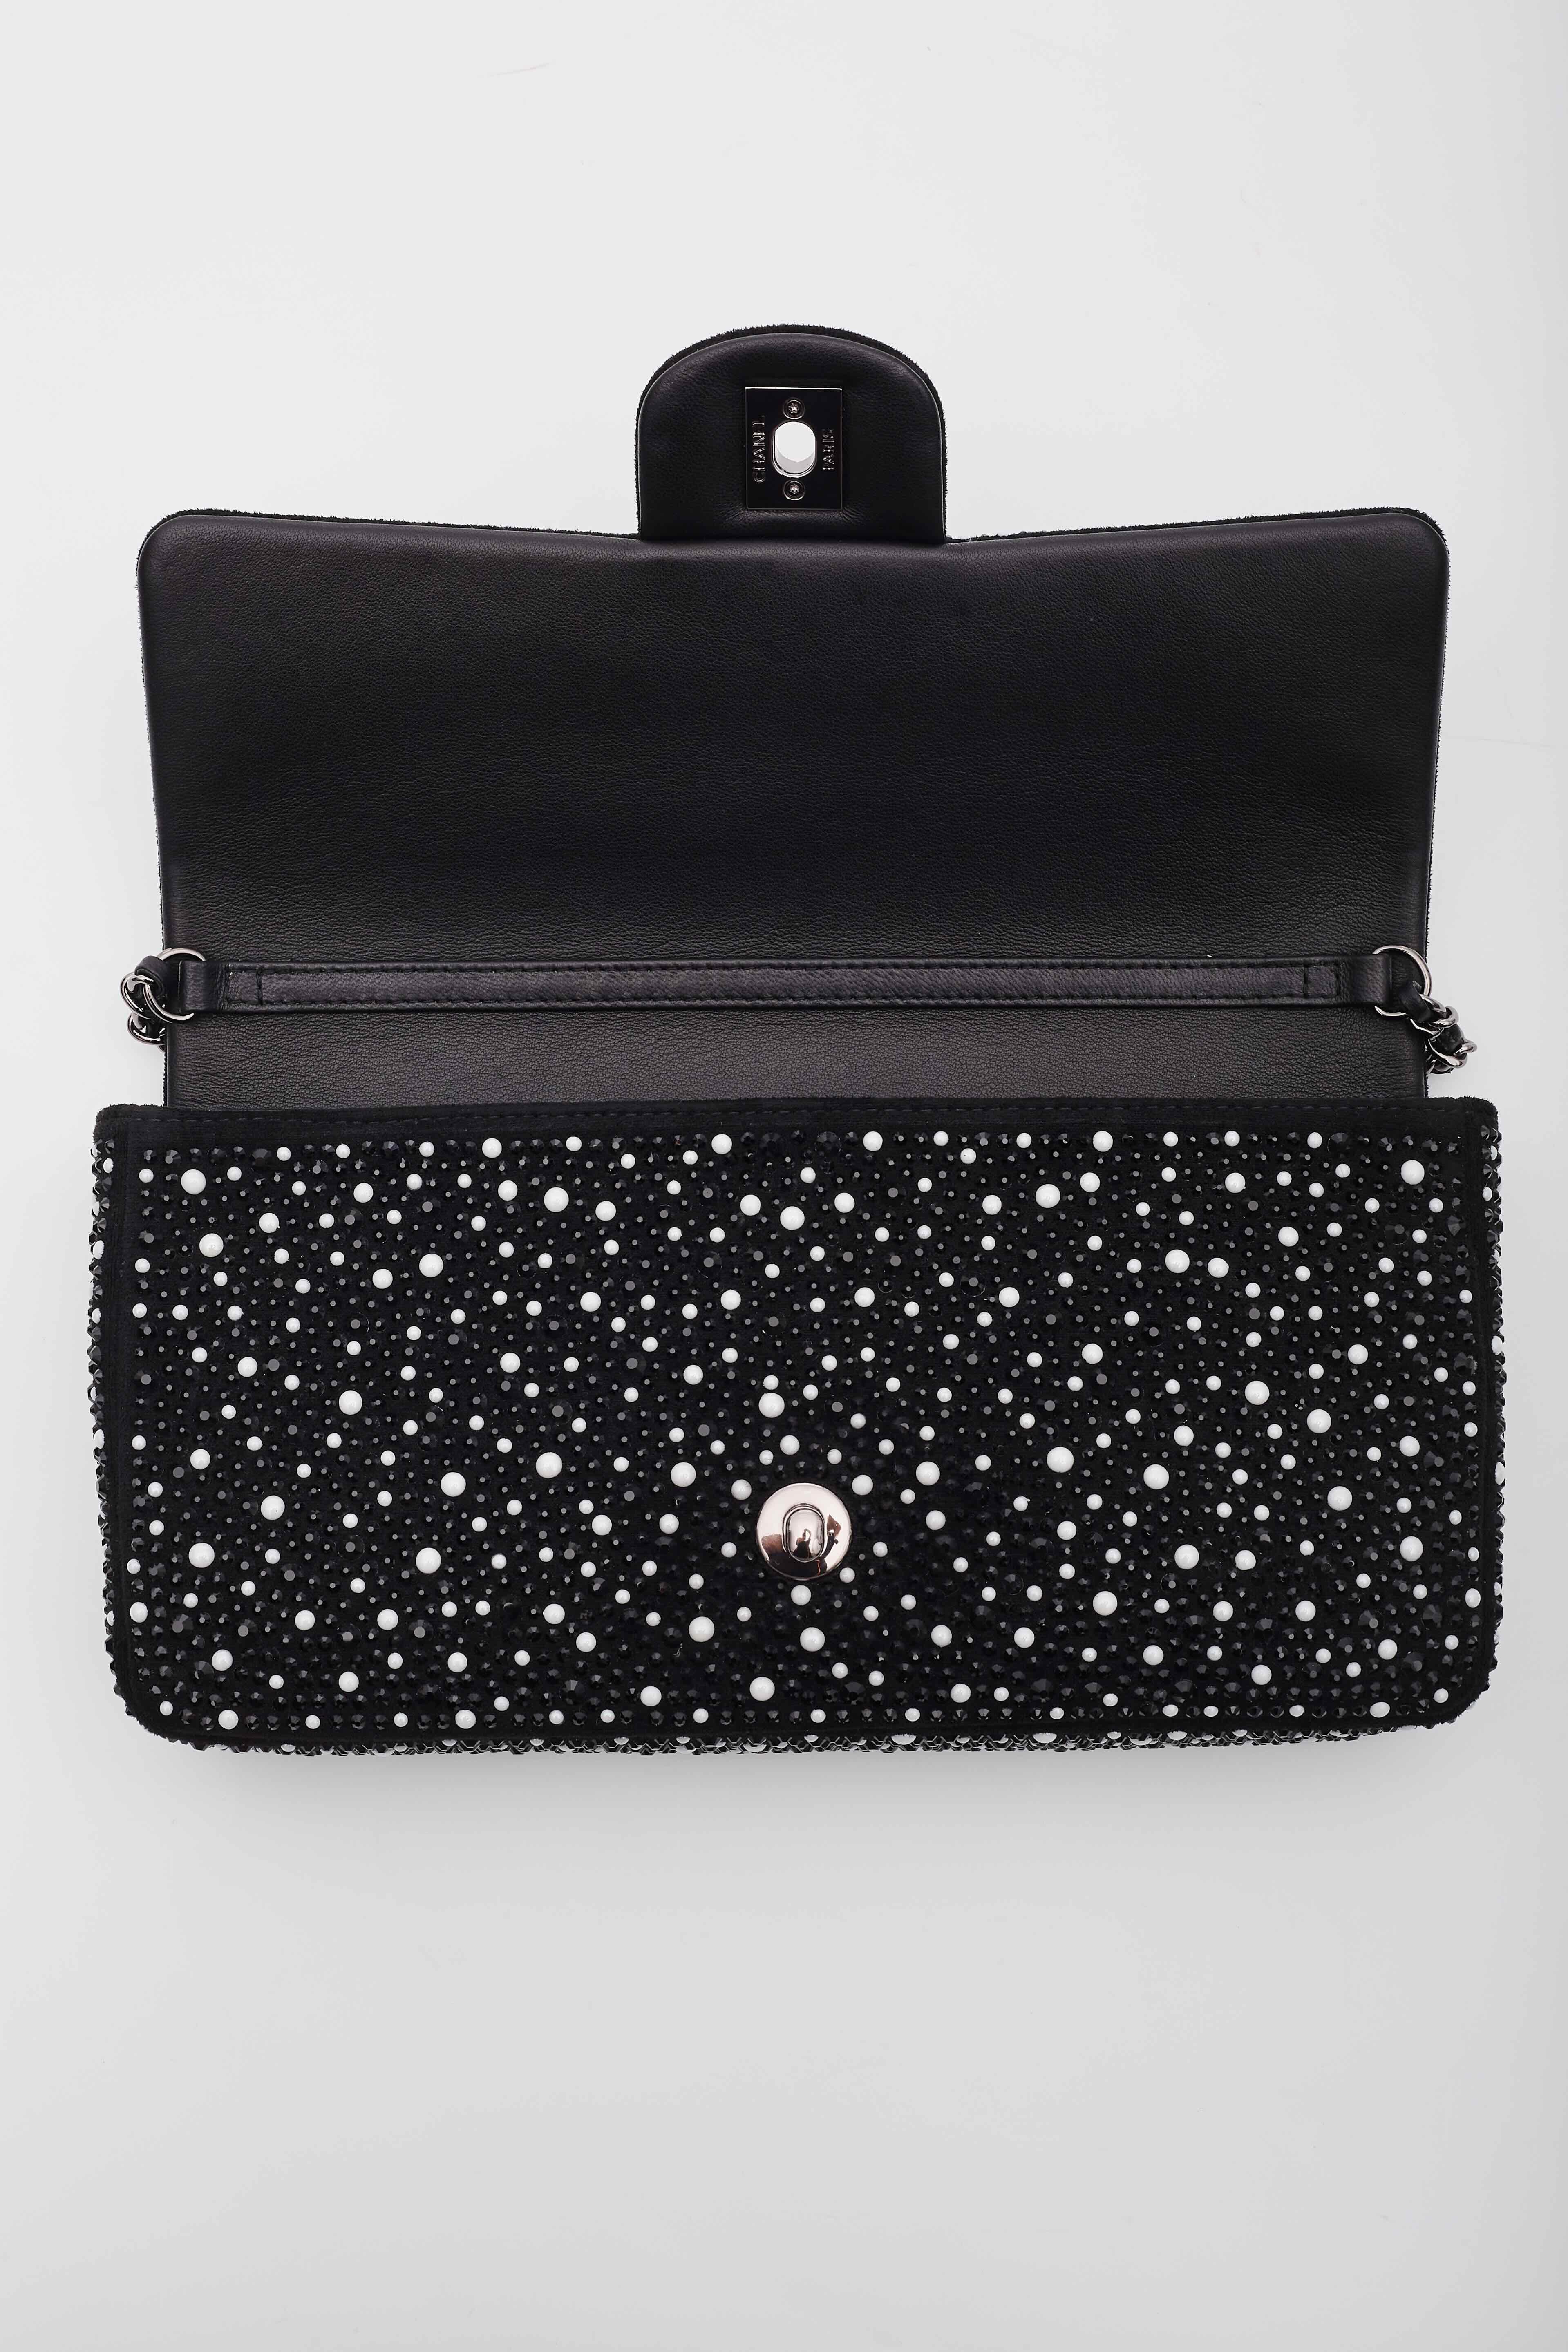 Chanel Strass Crystal Pearls & Ruthenium Metal Shoulder Bag Black & White 2